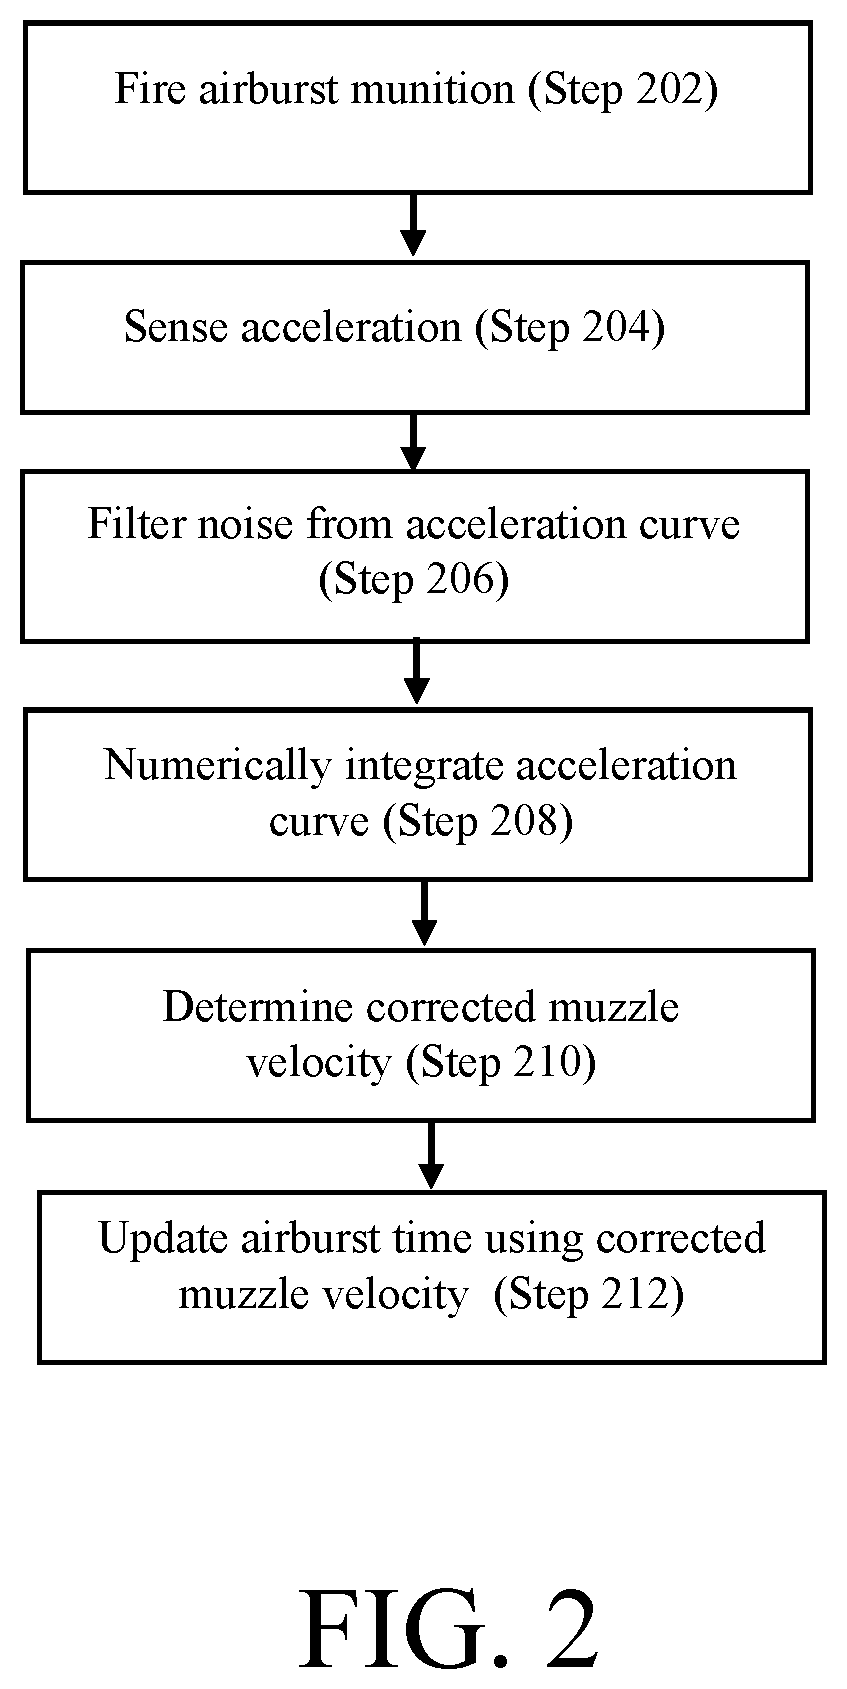 Muzzle velocity correction